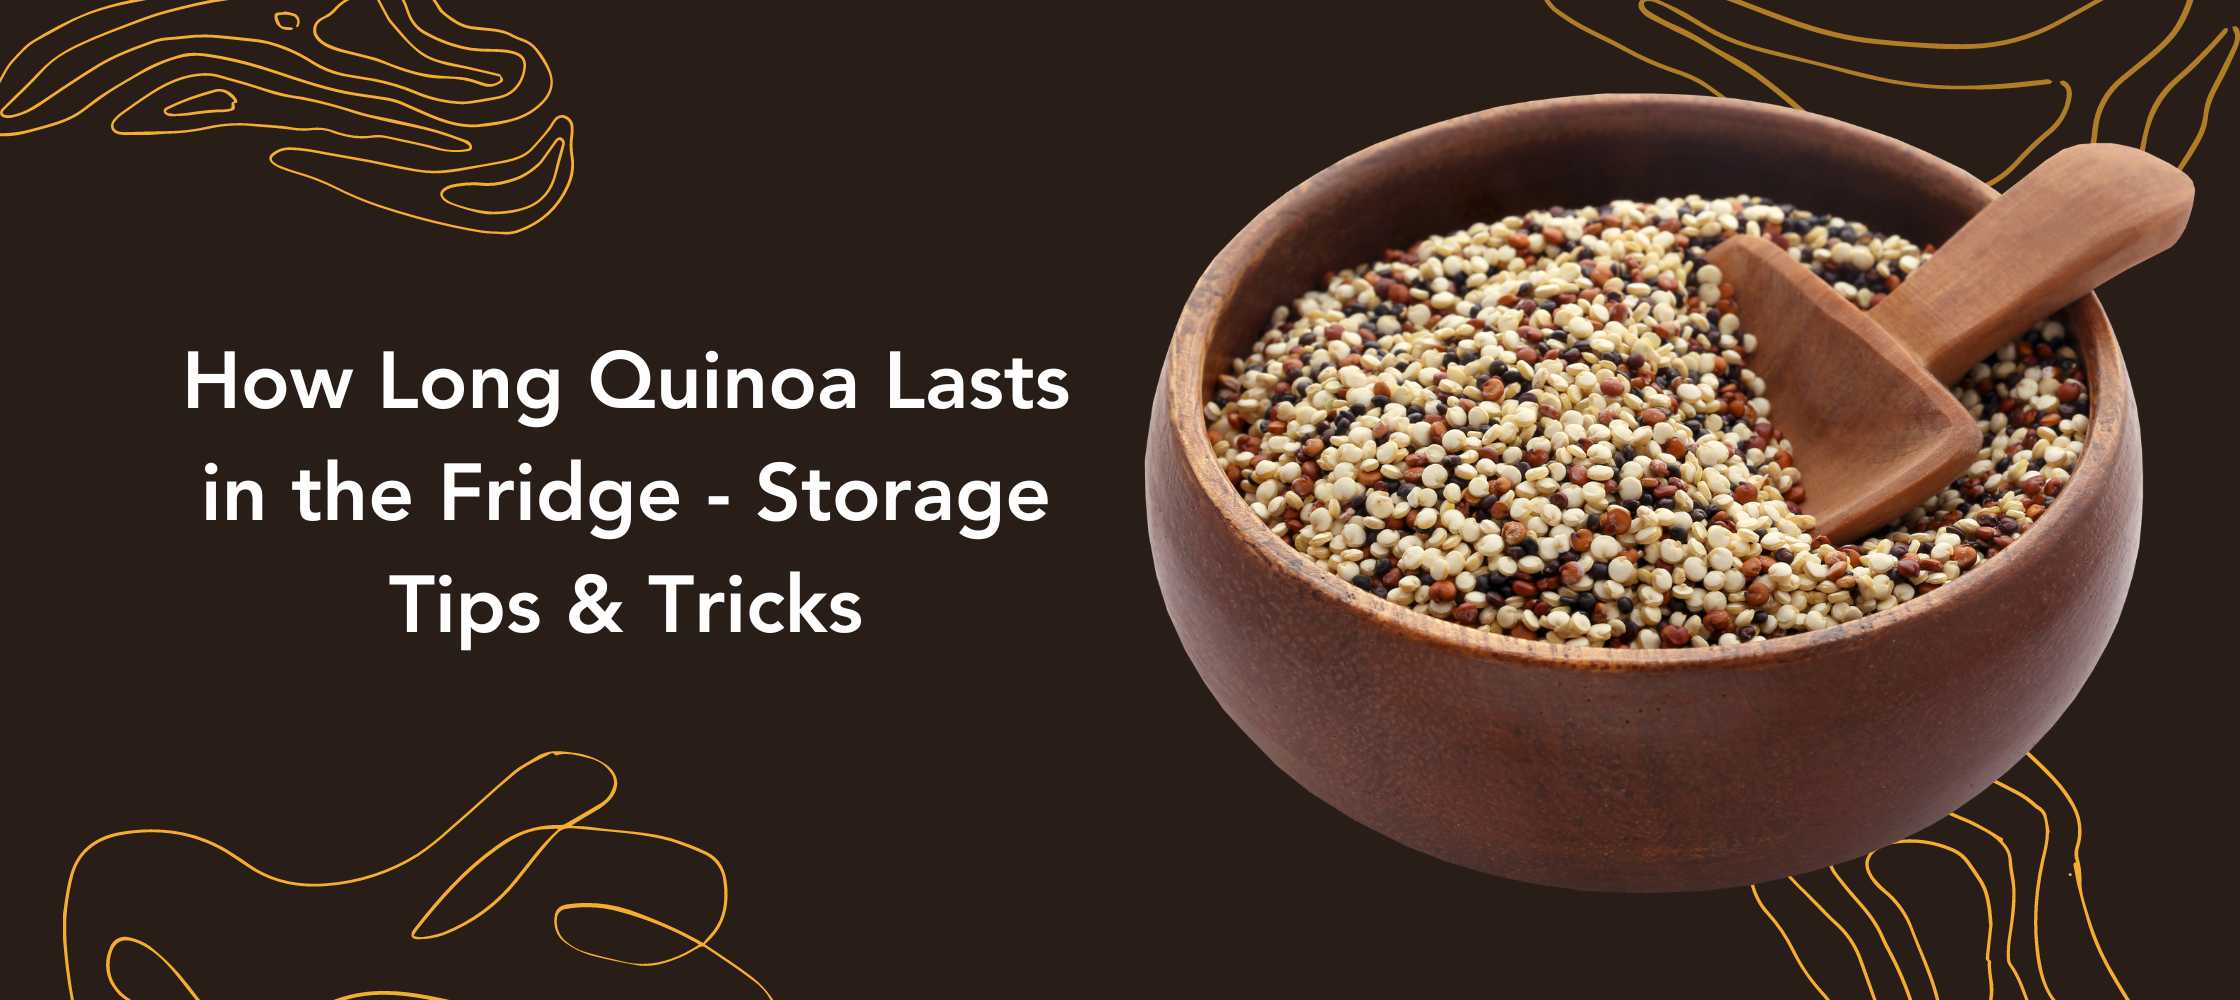 How Long Quinoa Lasts in the Fridge